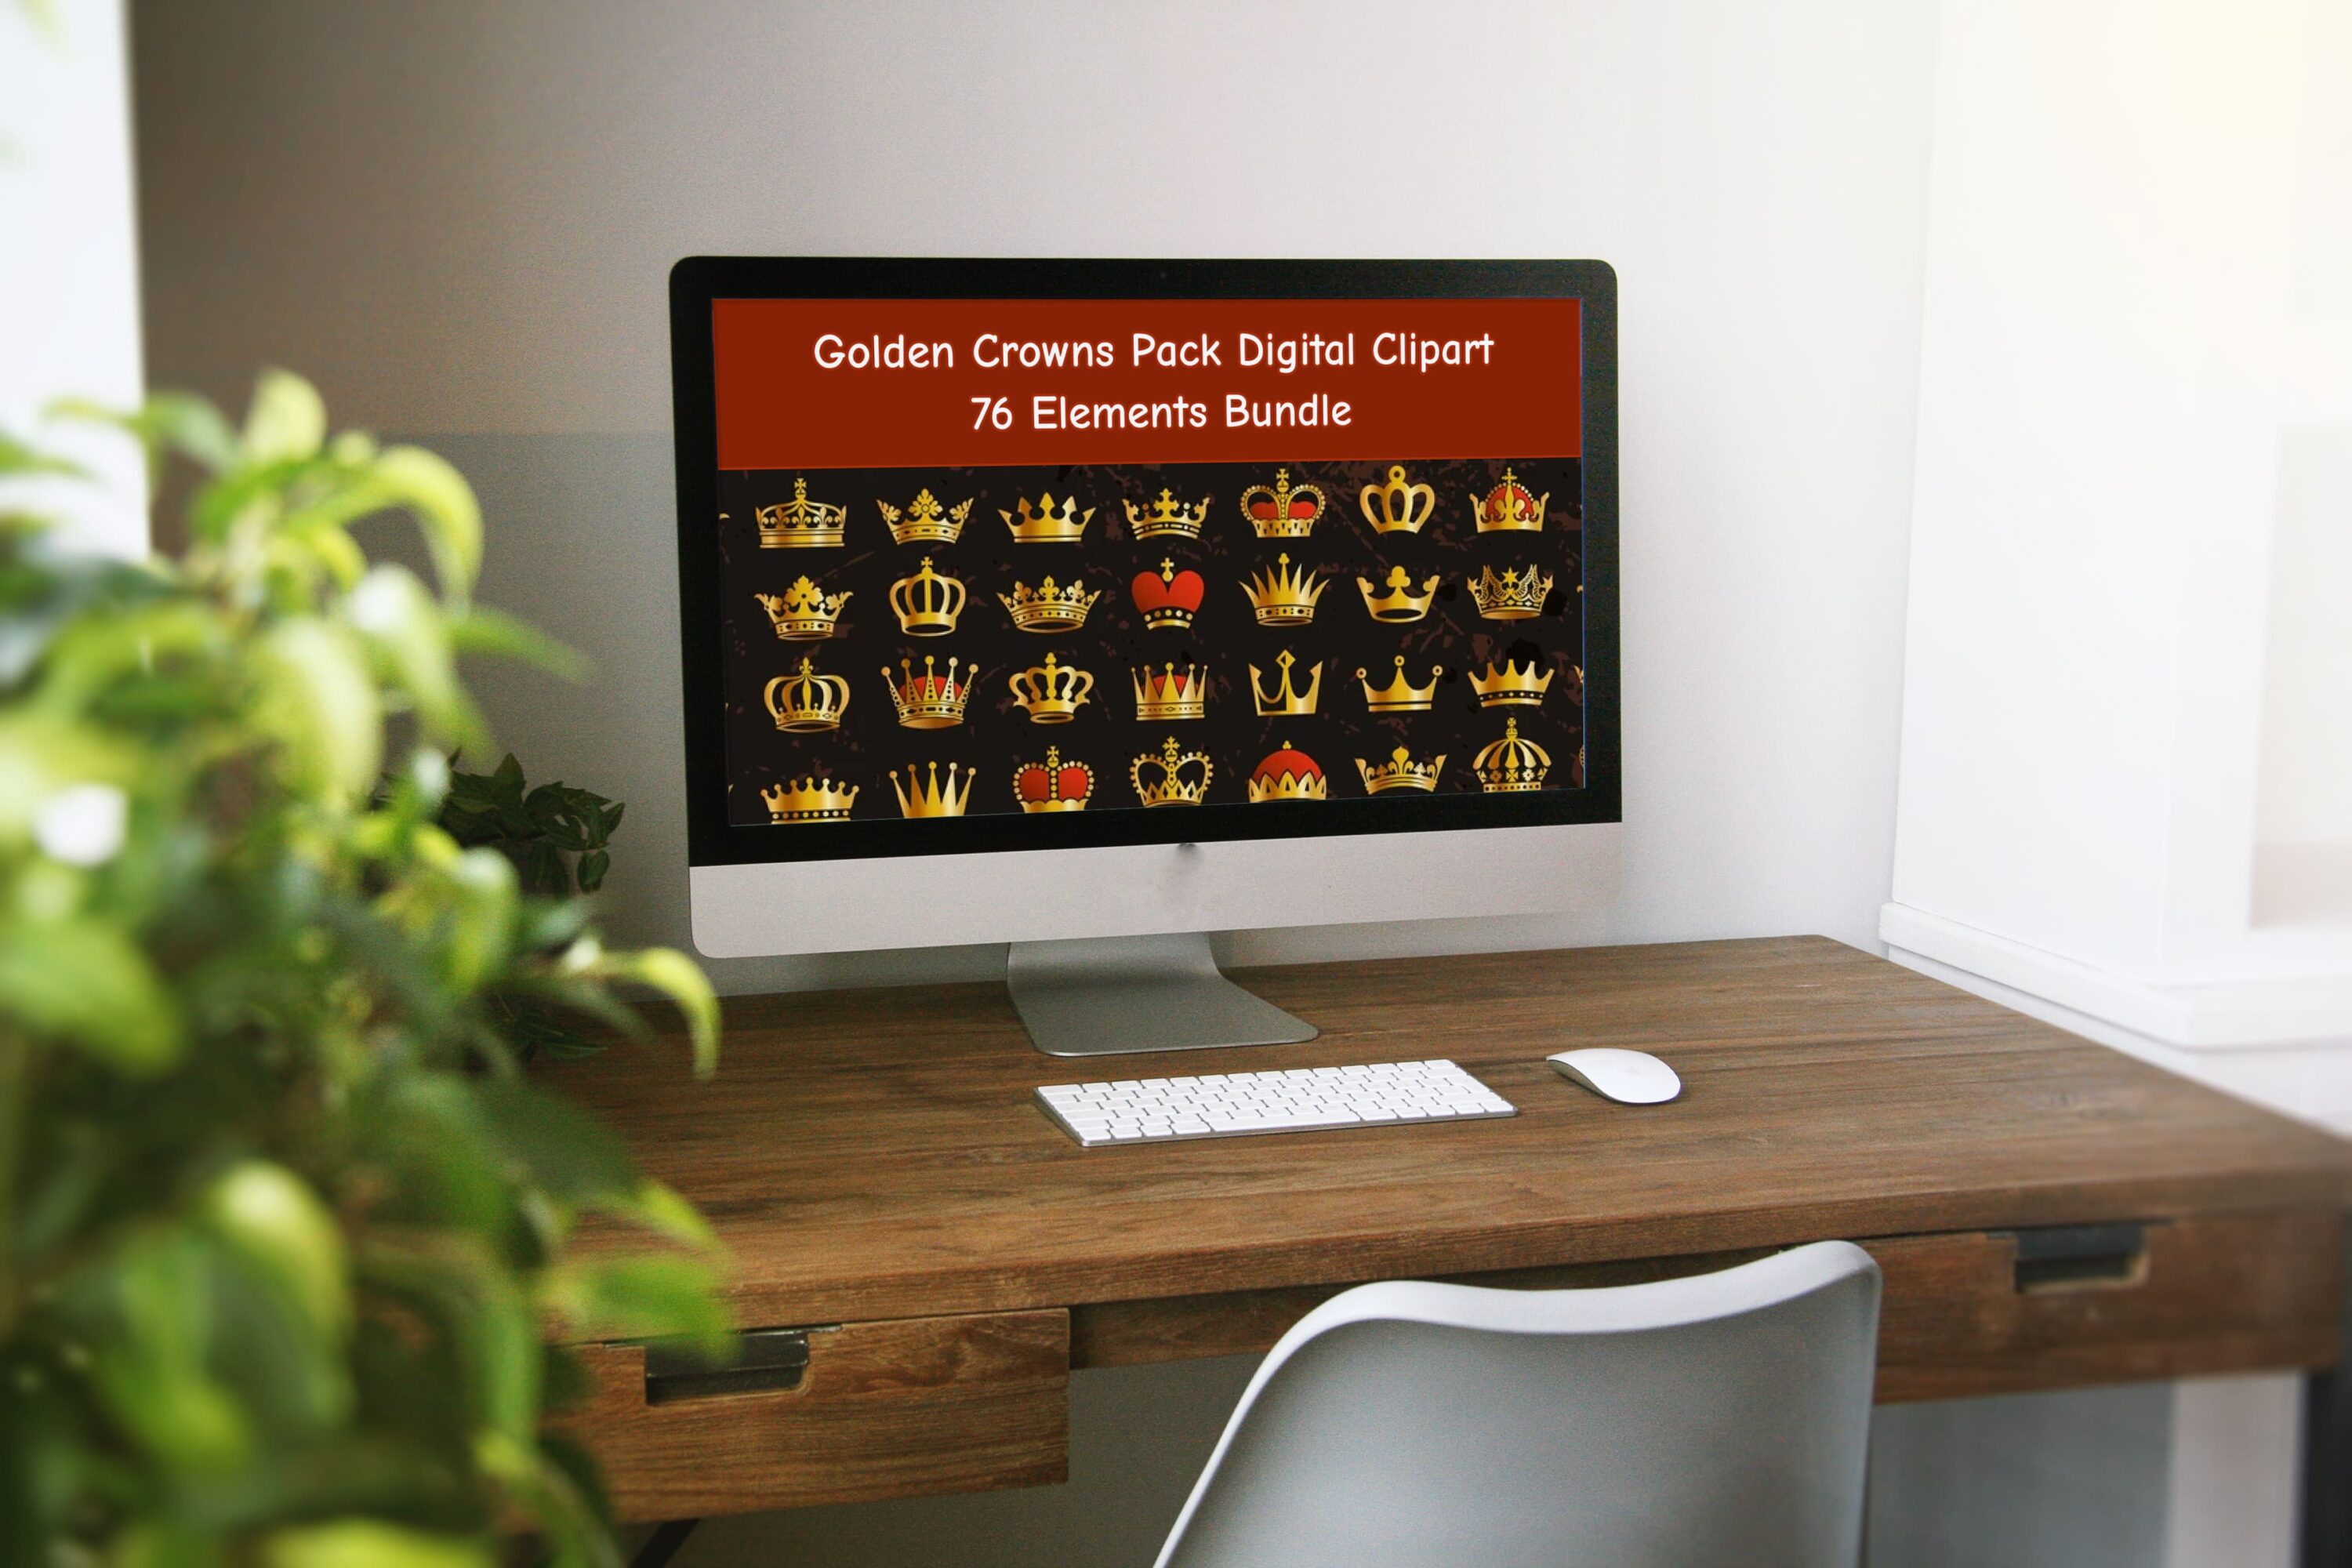 Desktop option of the Golden Crowns Pack Digital Clipart, 76 Elements Bundle.